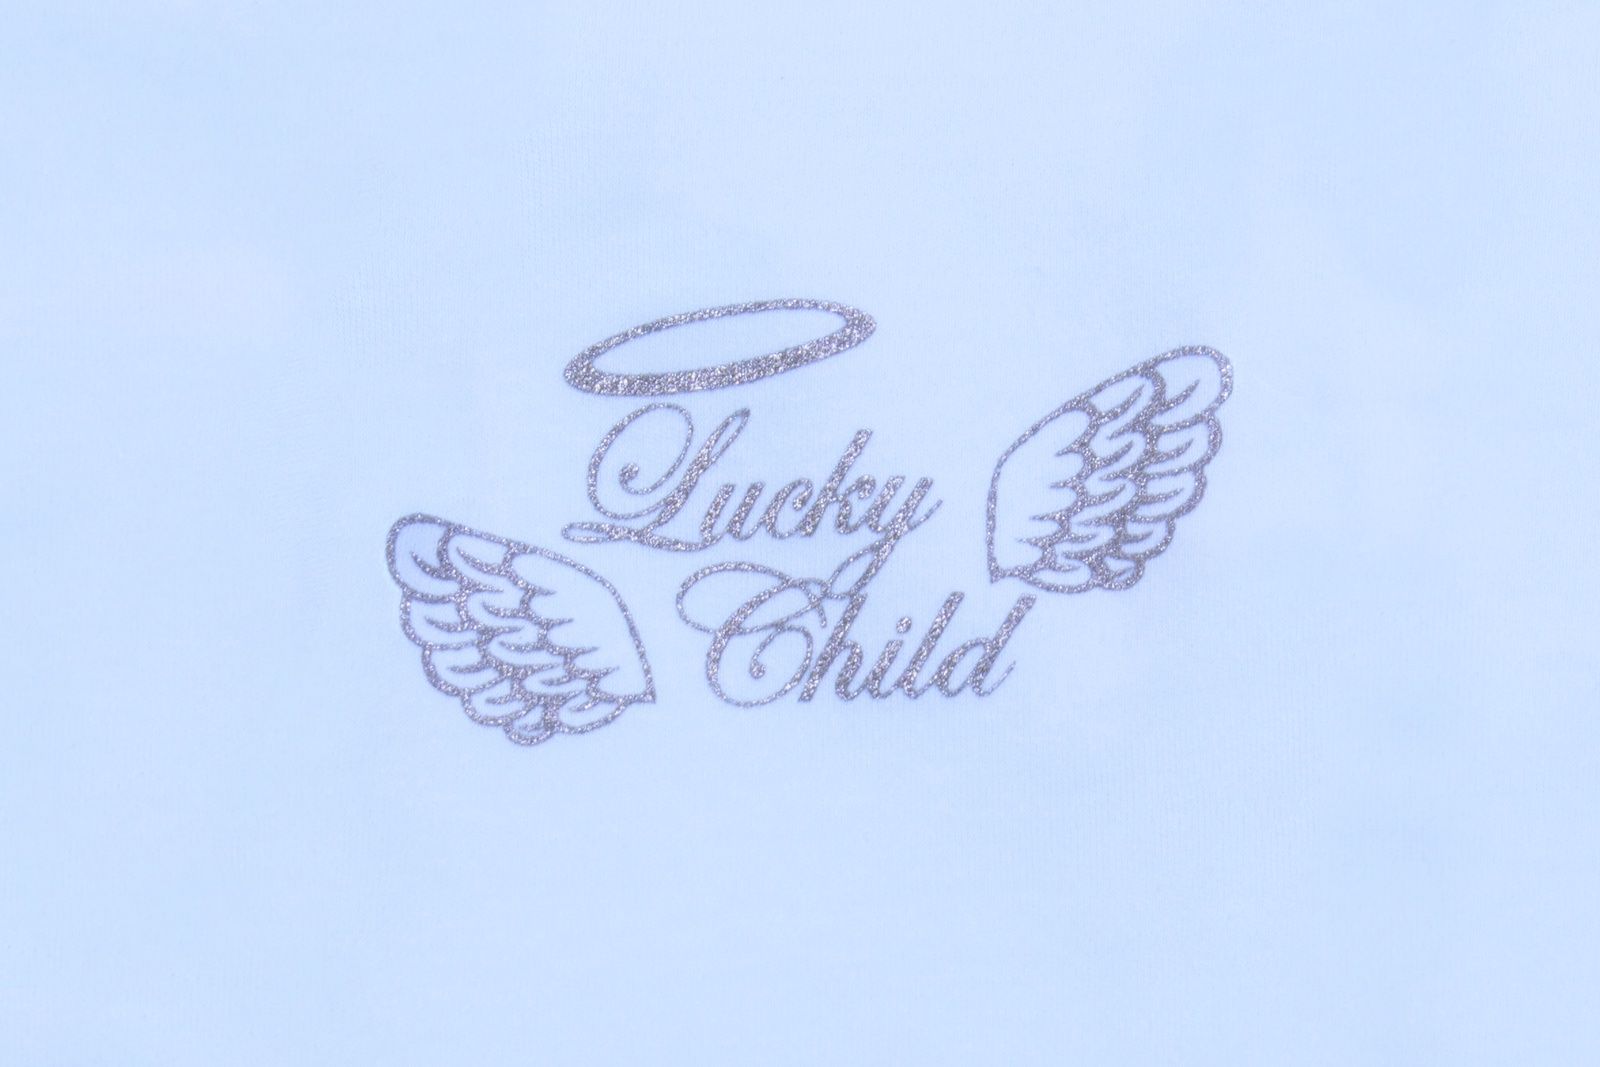  Lucky Child,  62/68 